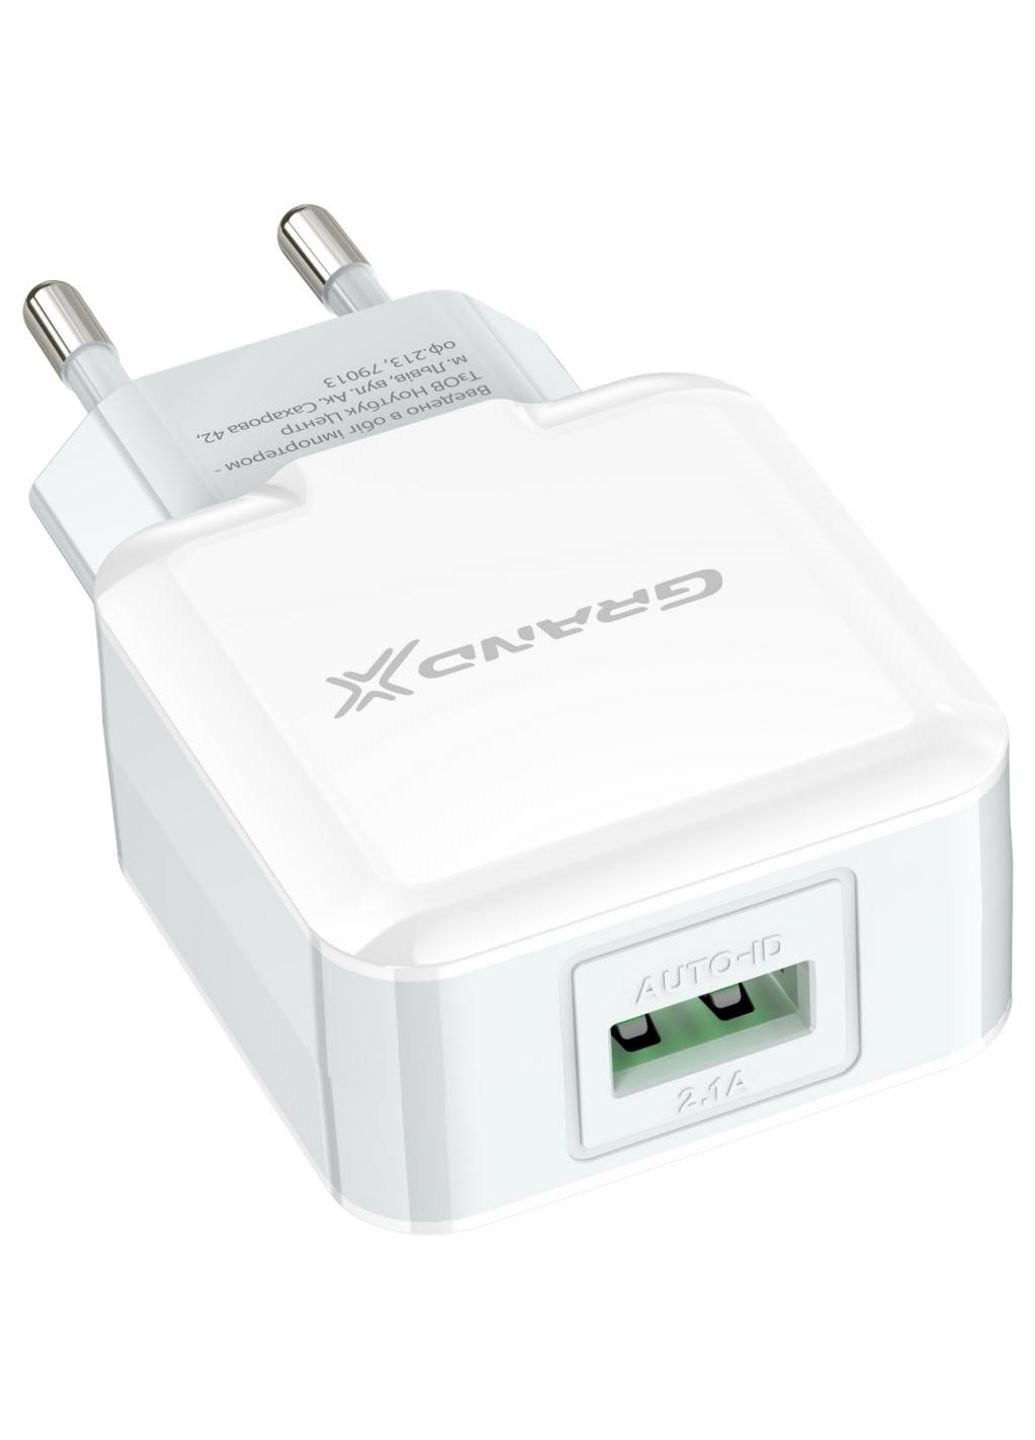 Зарядное устройство (CH-03W) Grand-X 5v 2.1a white (253507182)